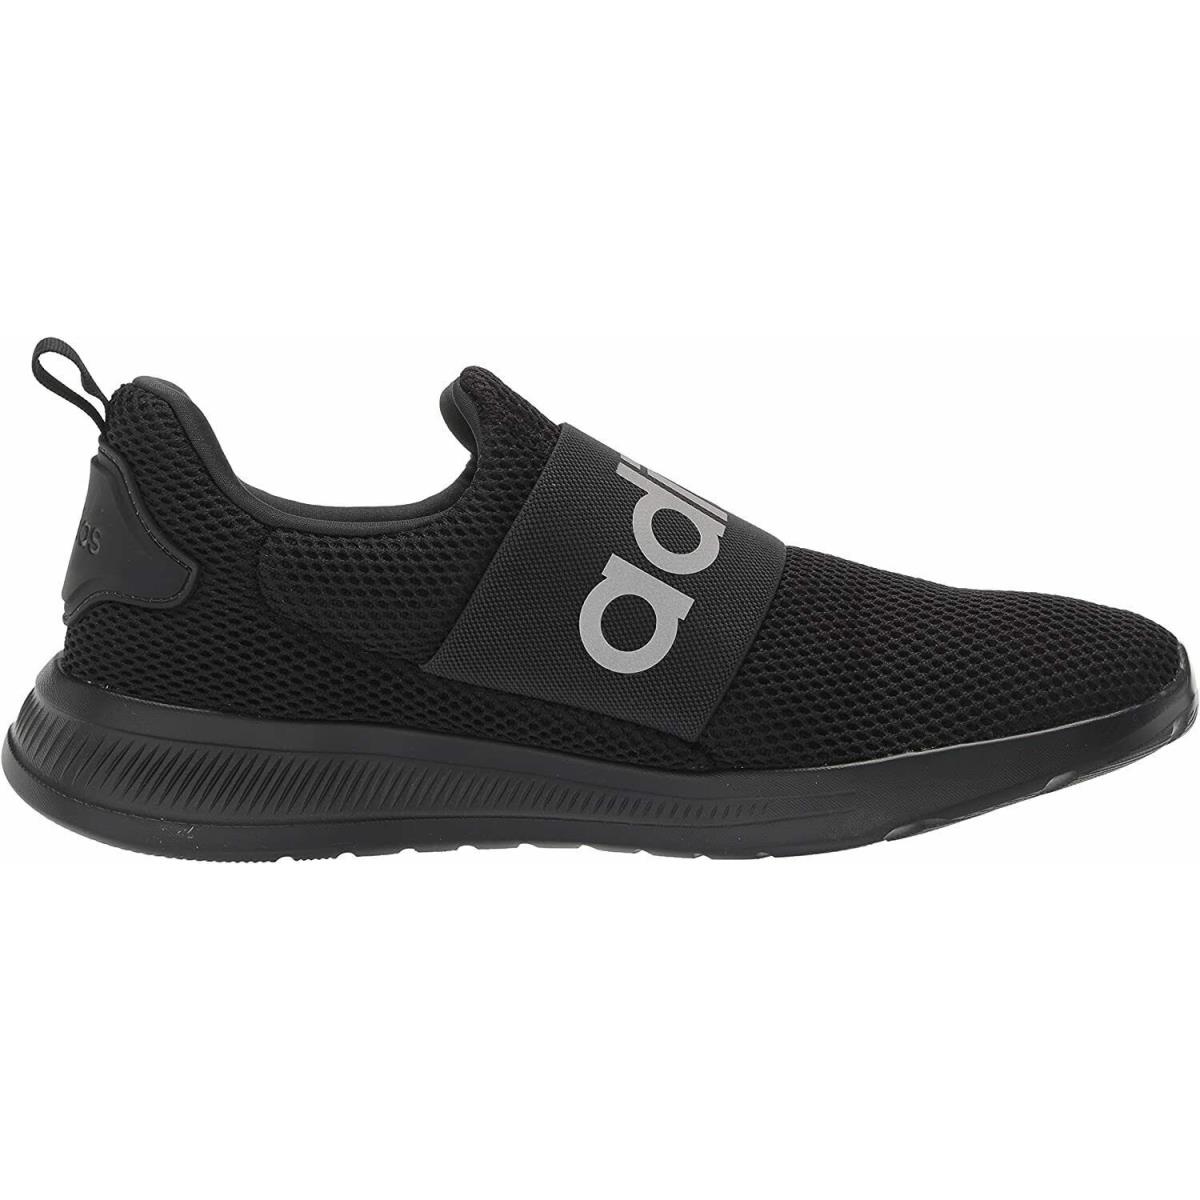 Adidas shoes Lite Racer - Black 0